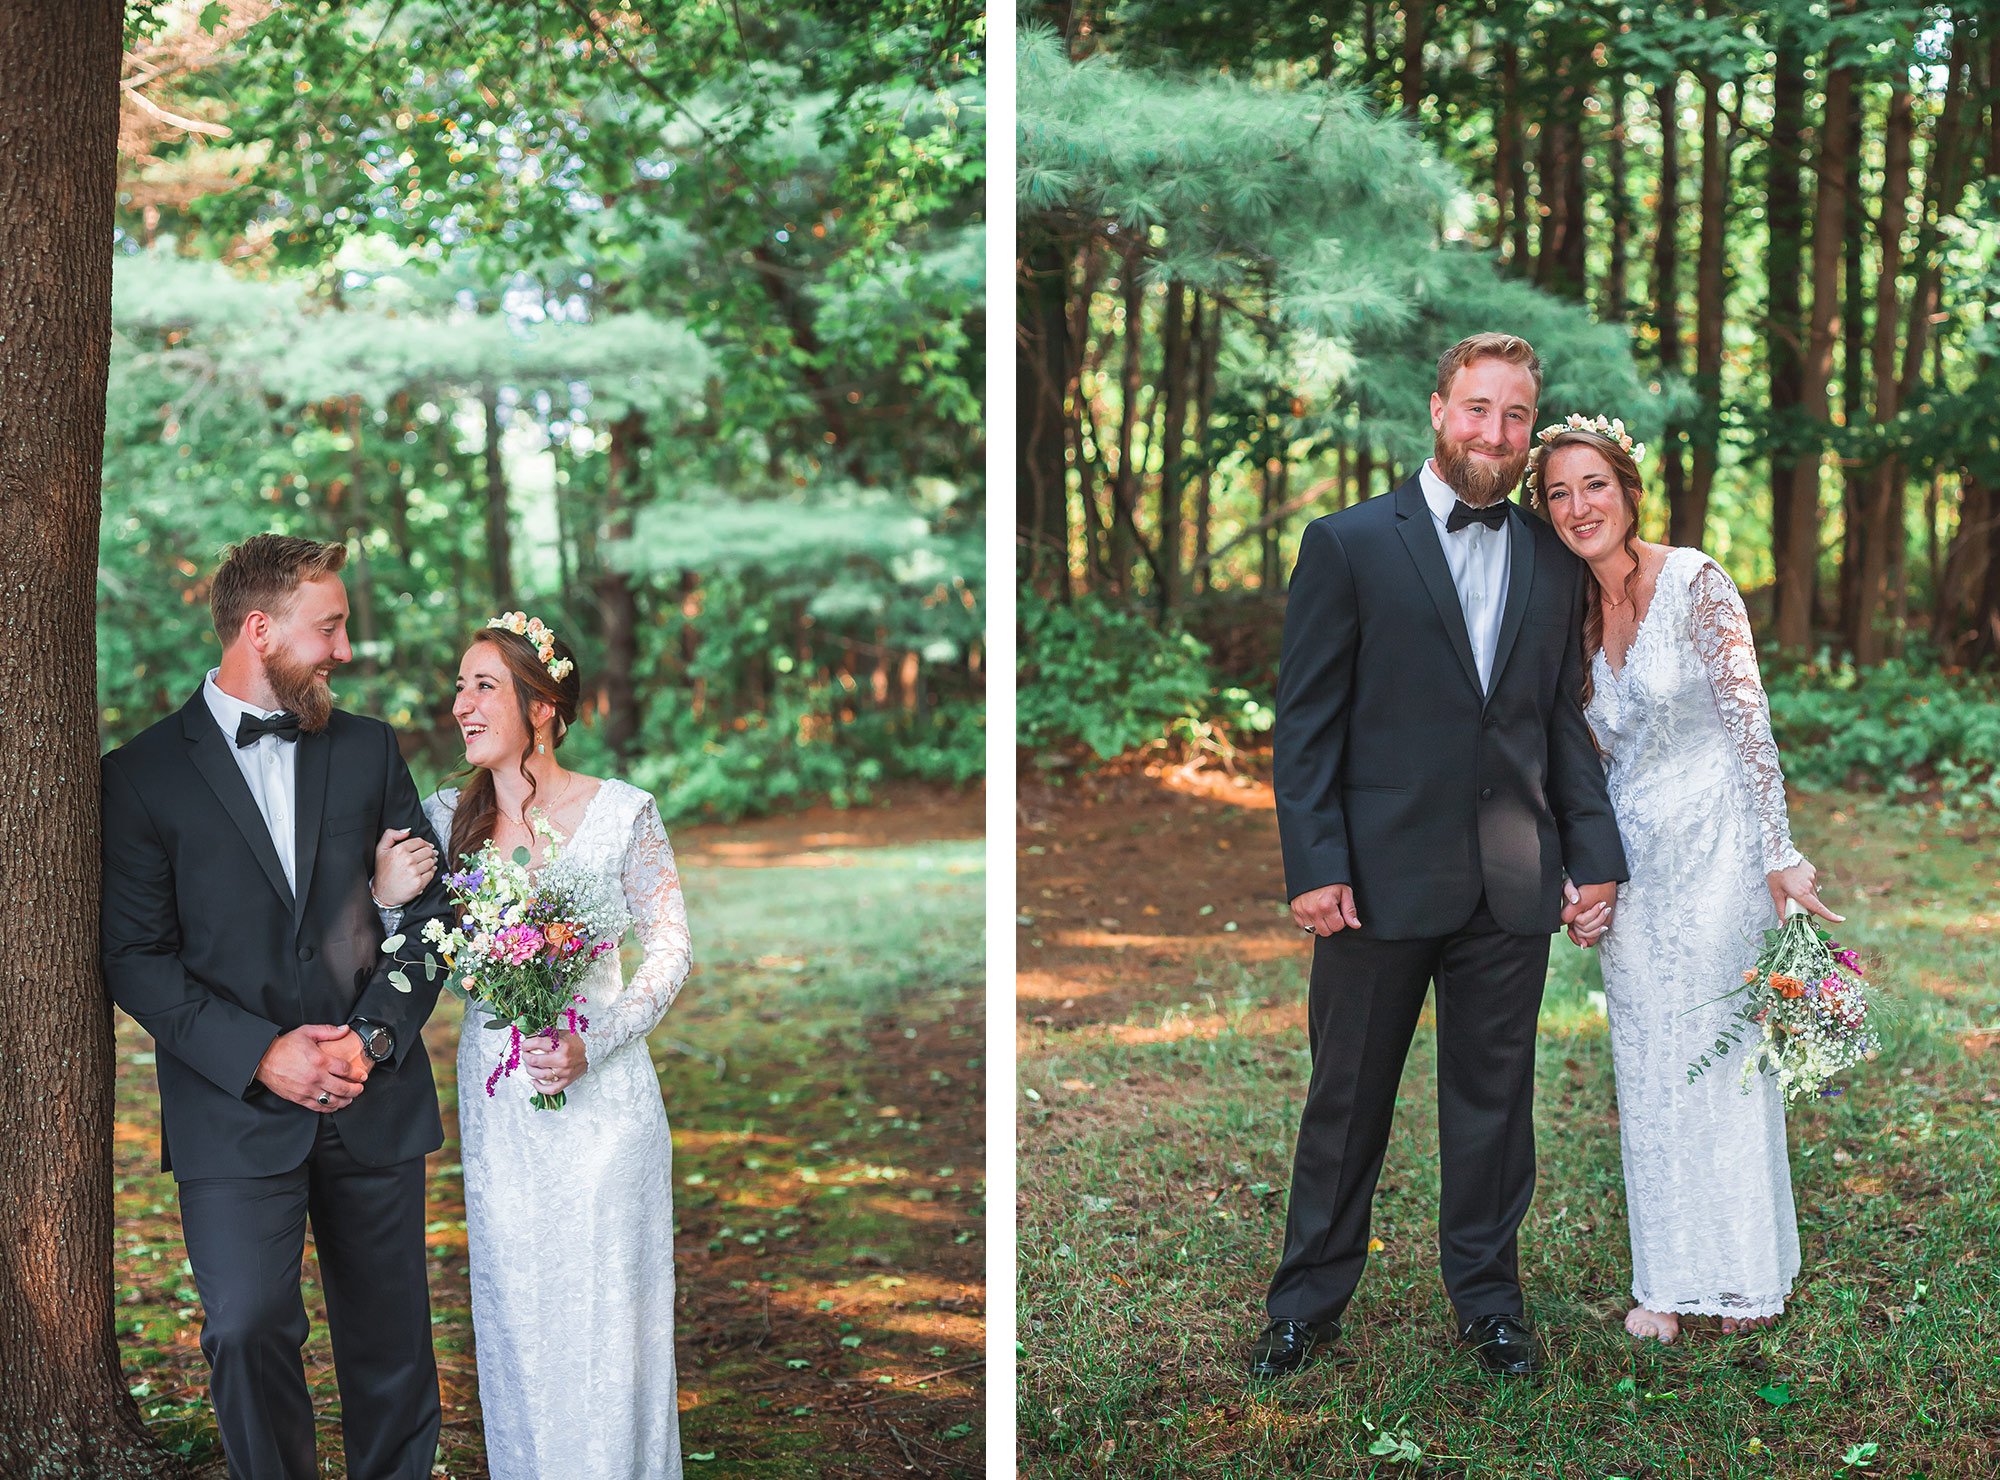 Danvers Wedding Photographer | Stephen Grant Photography